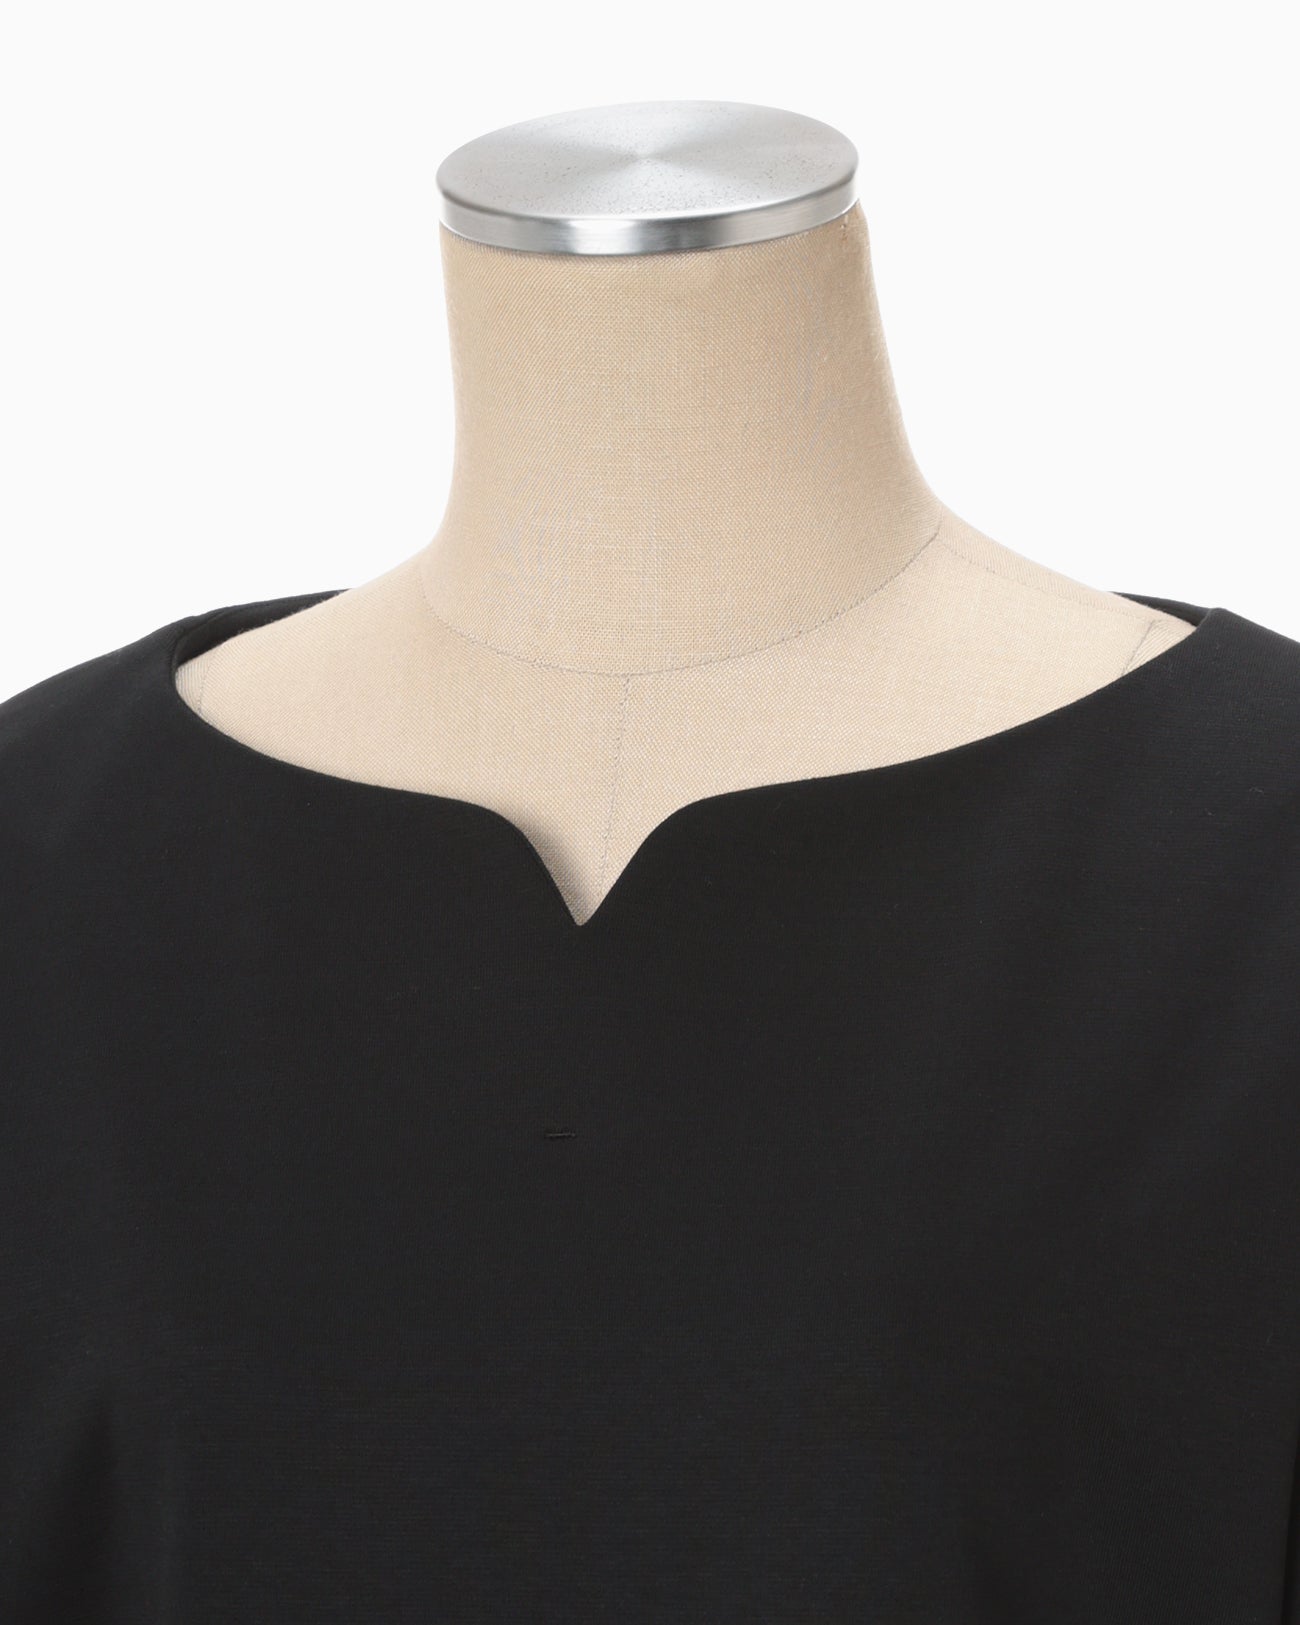 Double Jersey Peplum Dress - black